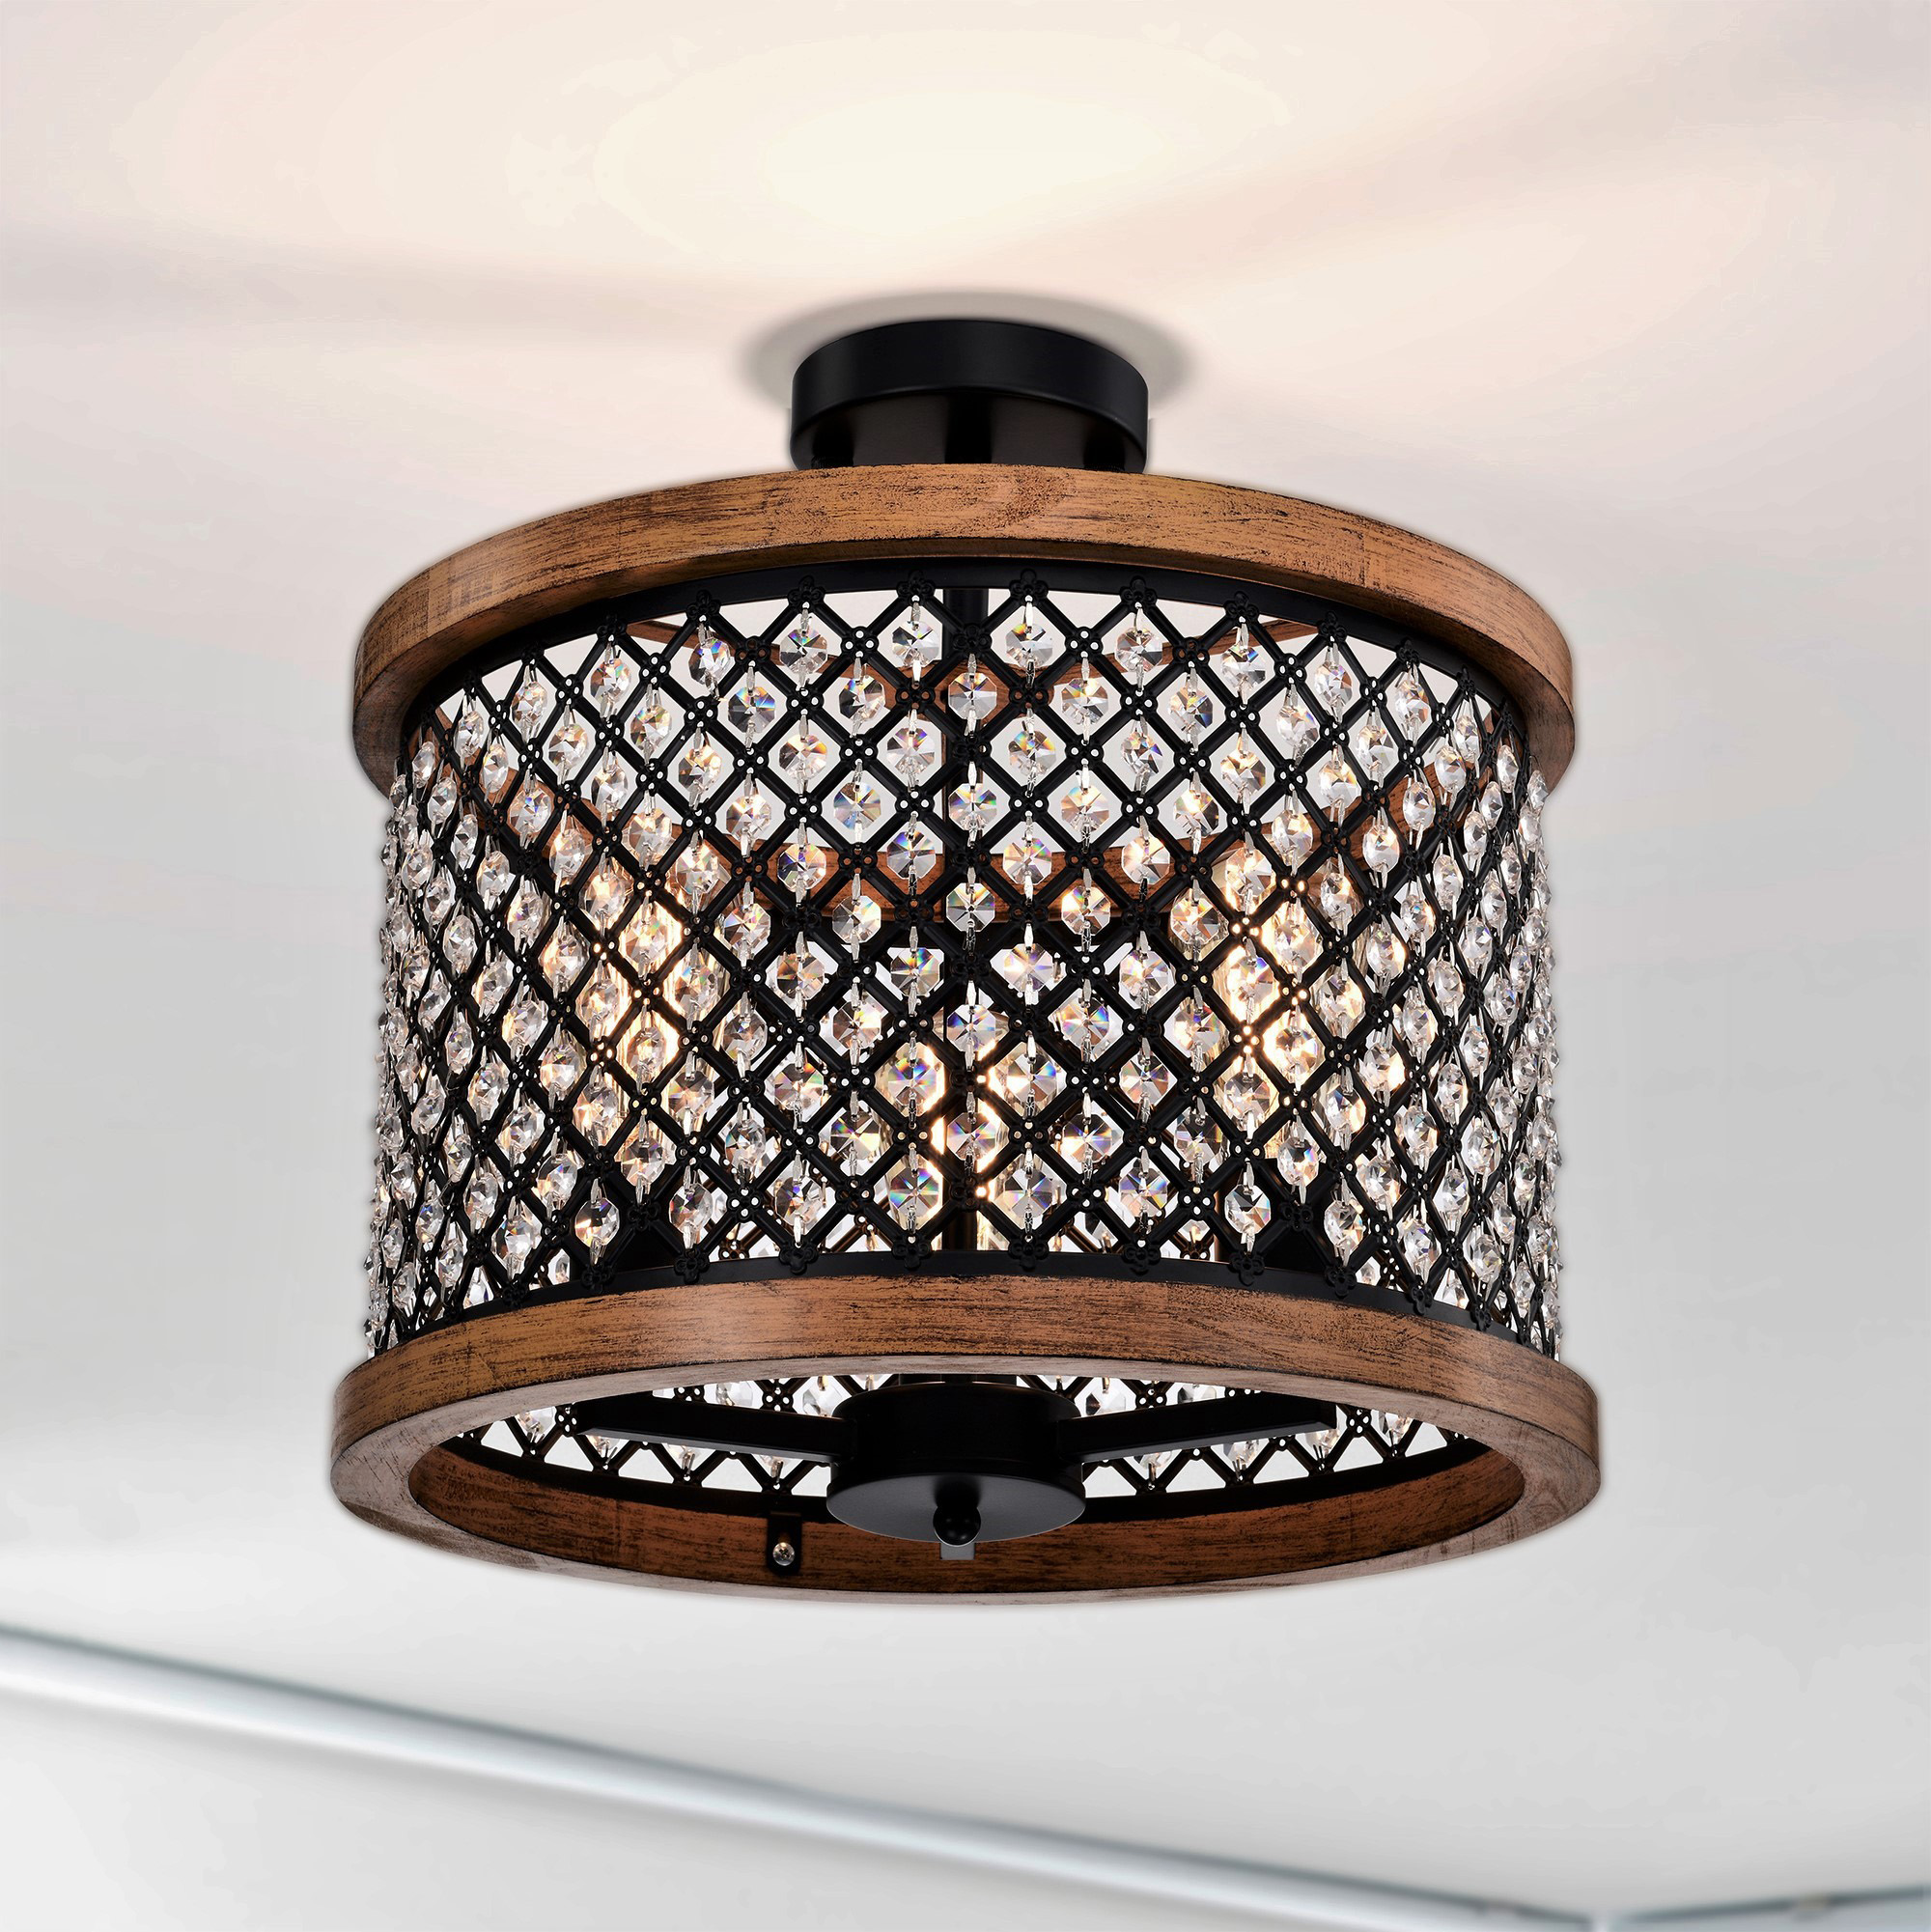 Denica 16 in. 3-Light Indoor Matte Black and Faux Wood Grain Finish Semi-Flush Mount Ceiling Light with Light Kit